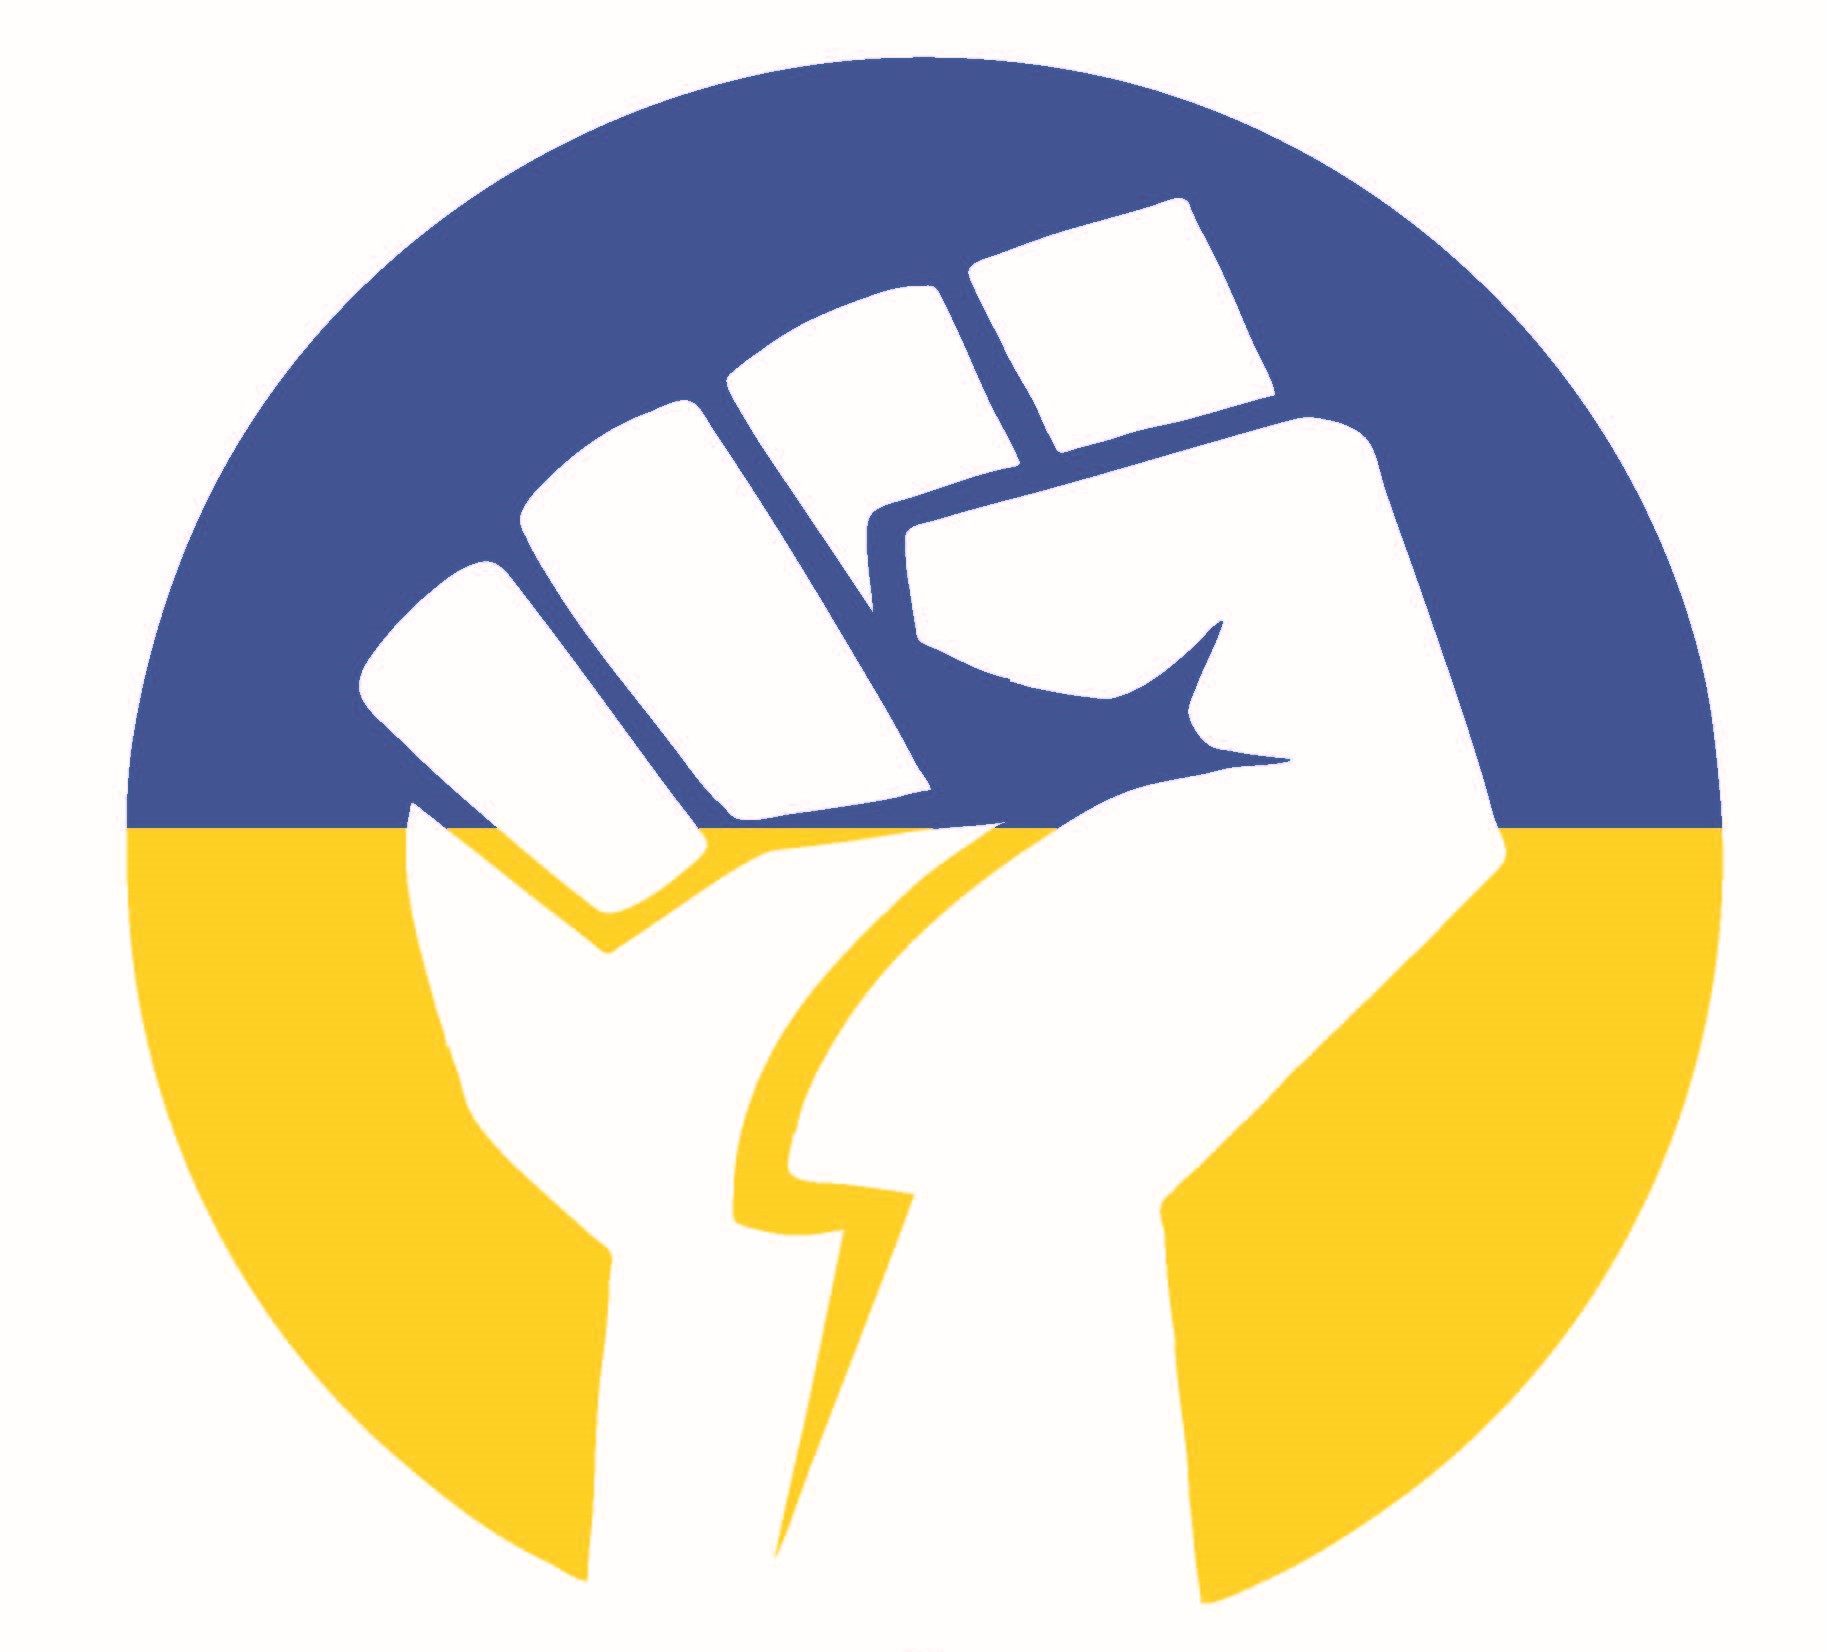 Ukraine's Struggle for Self-Determination